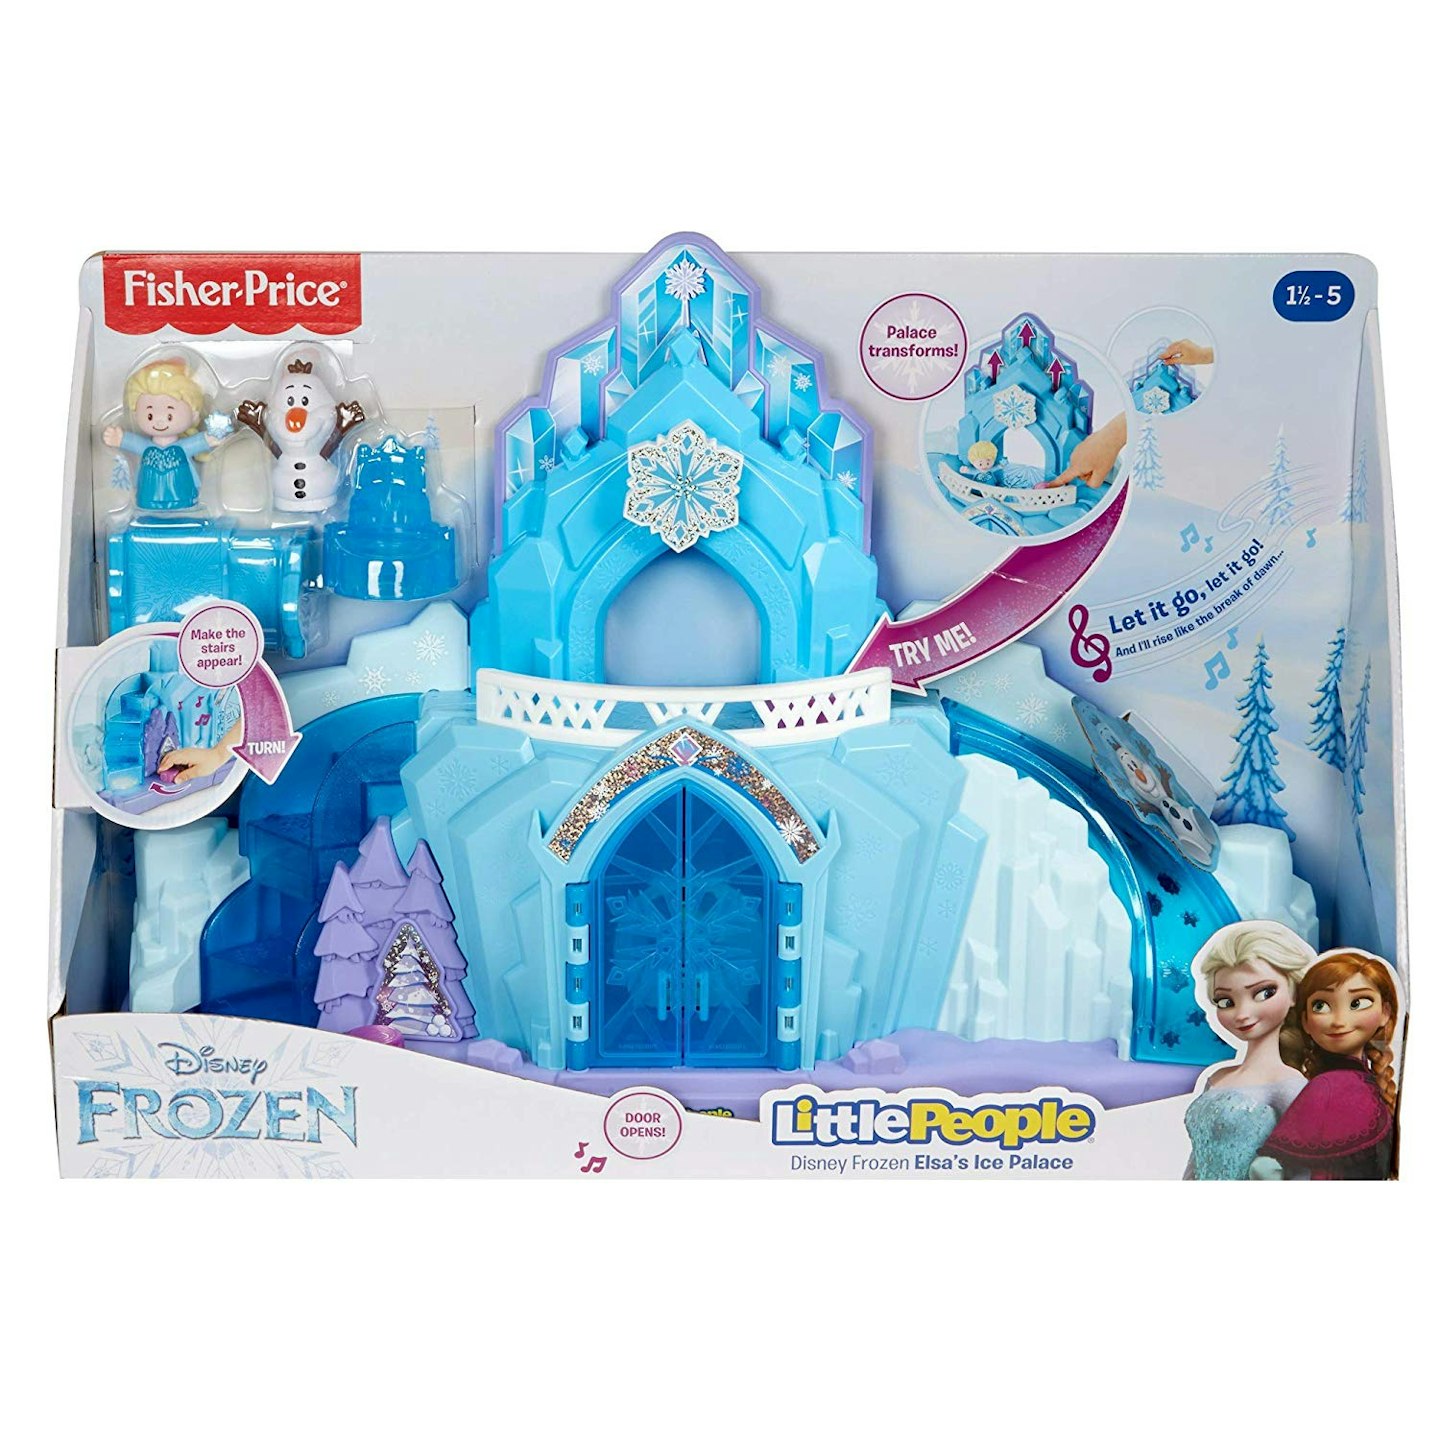 Little People Fisher-Price Disney Frozen Elsa's Ice Palace, £34.97